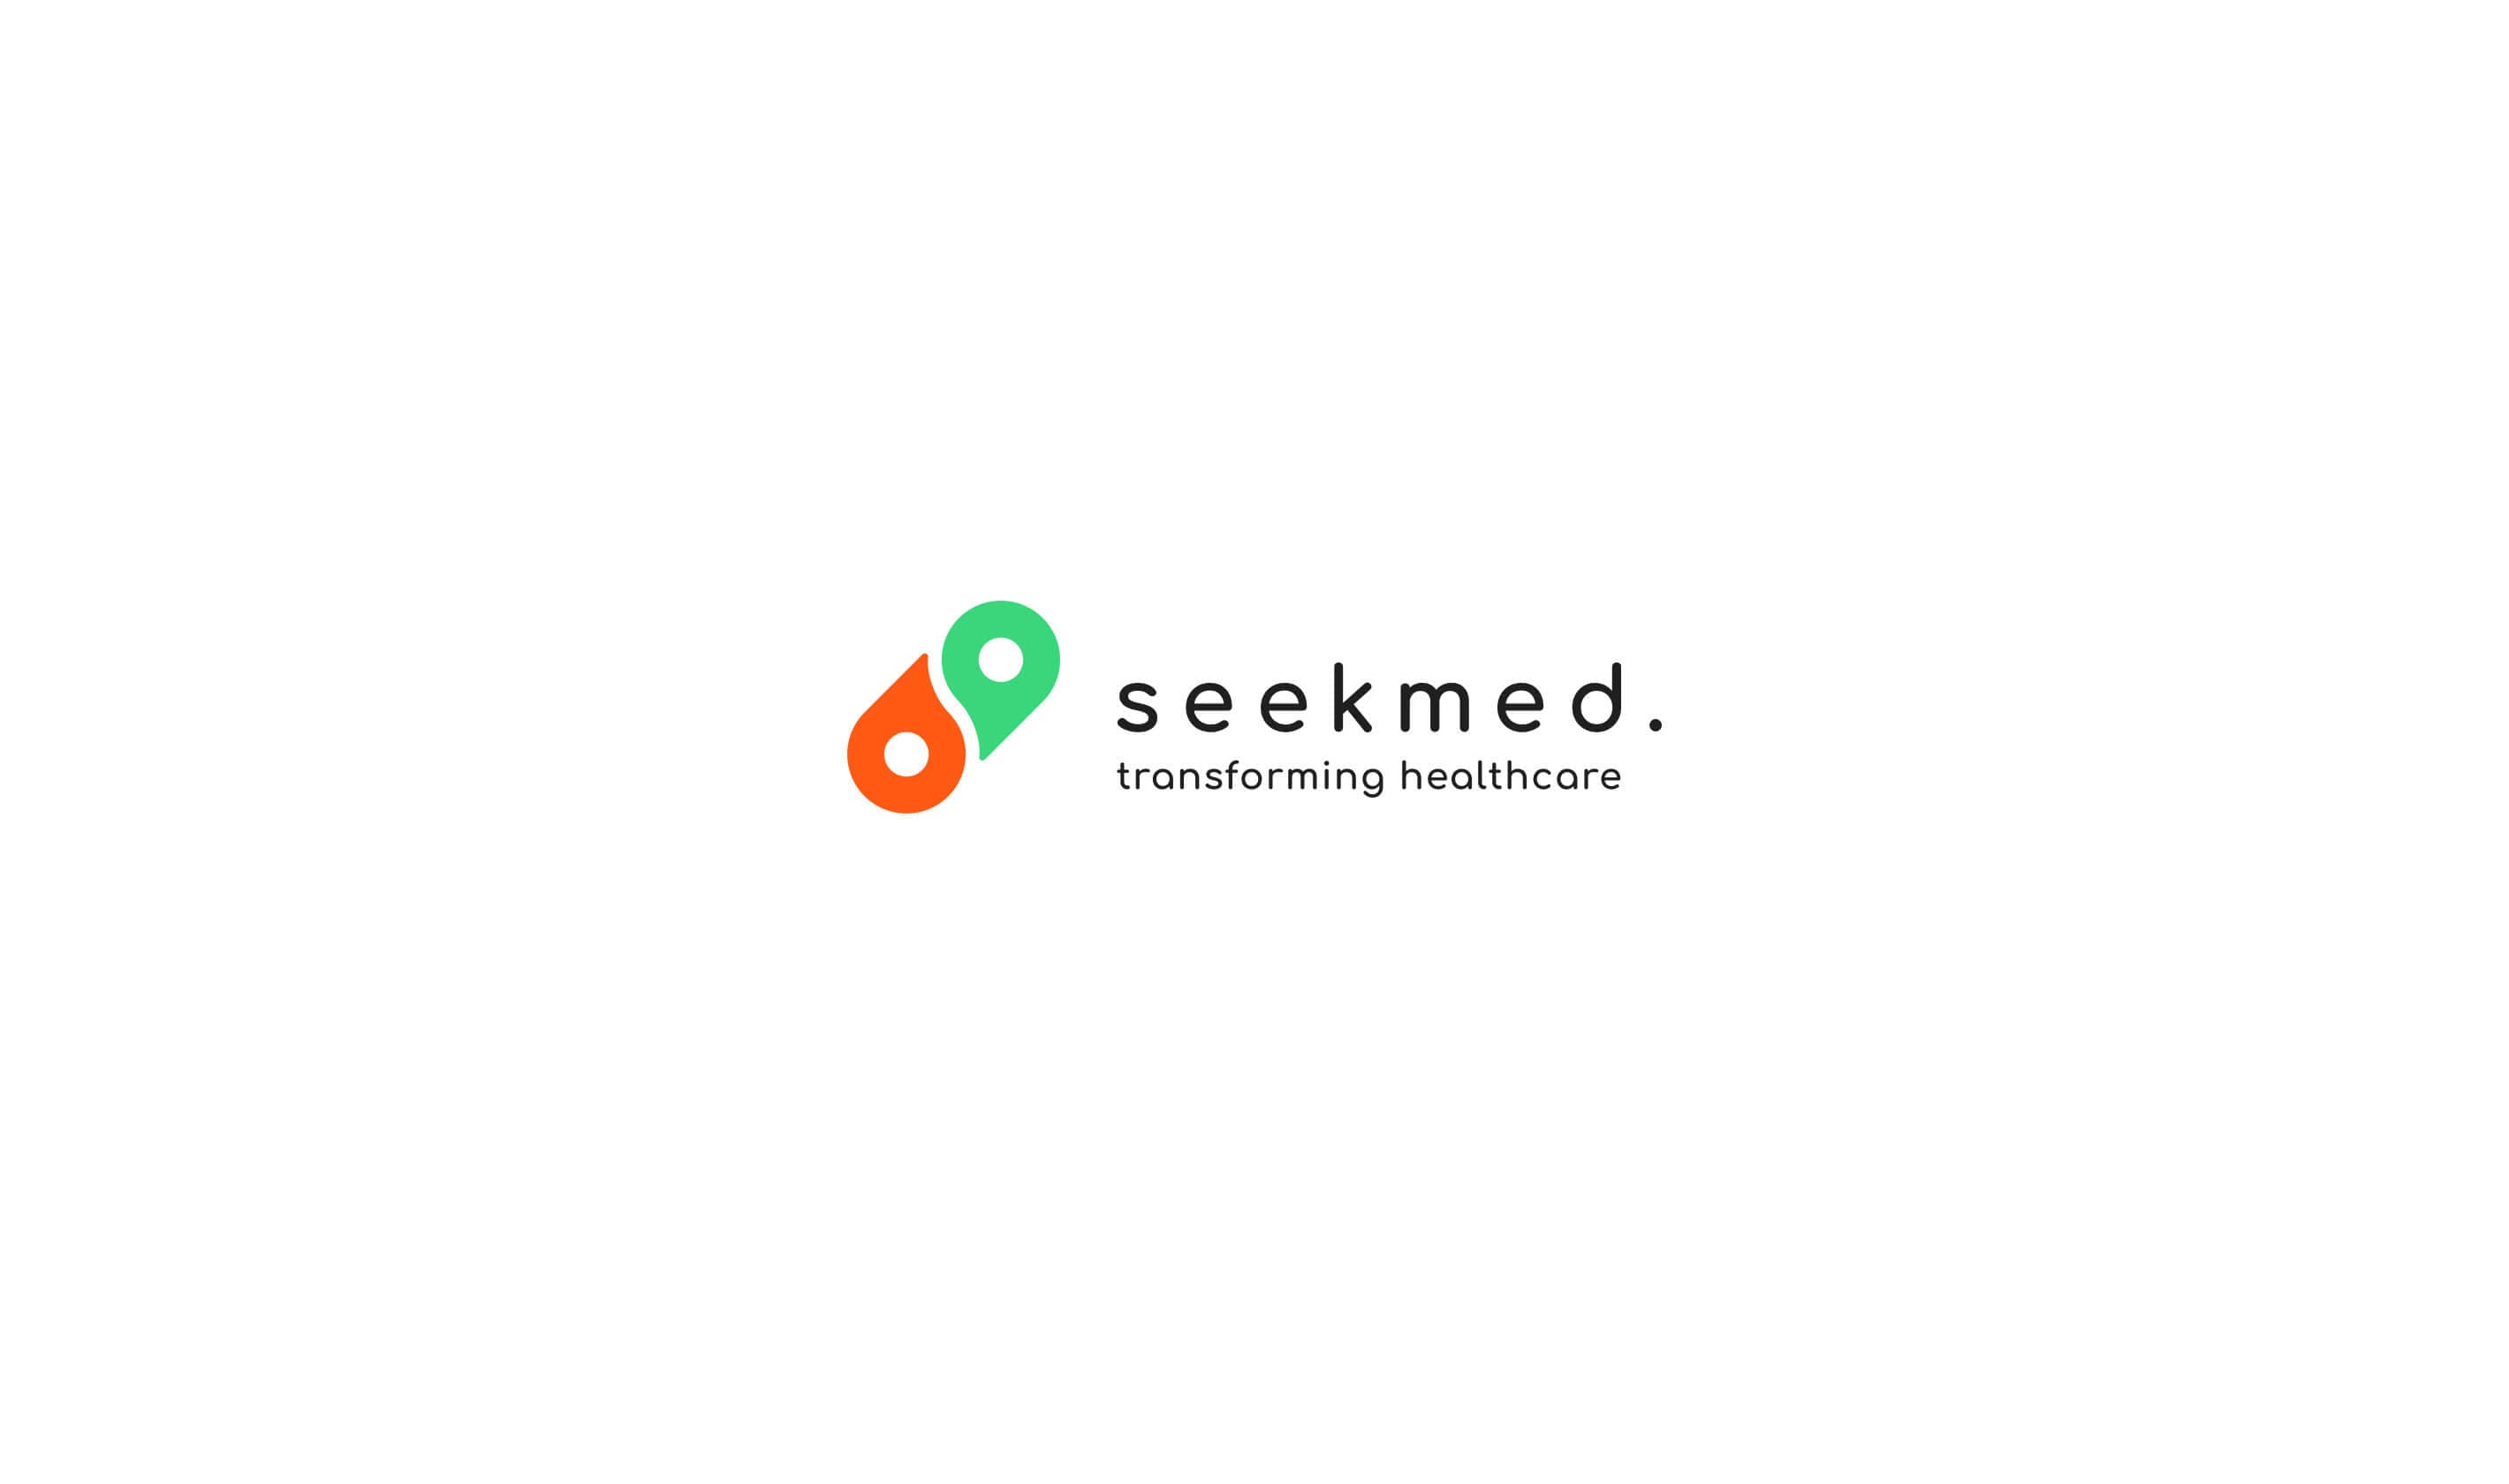 New SeekMed-telemedicine brand identity design by Omega it company